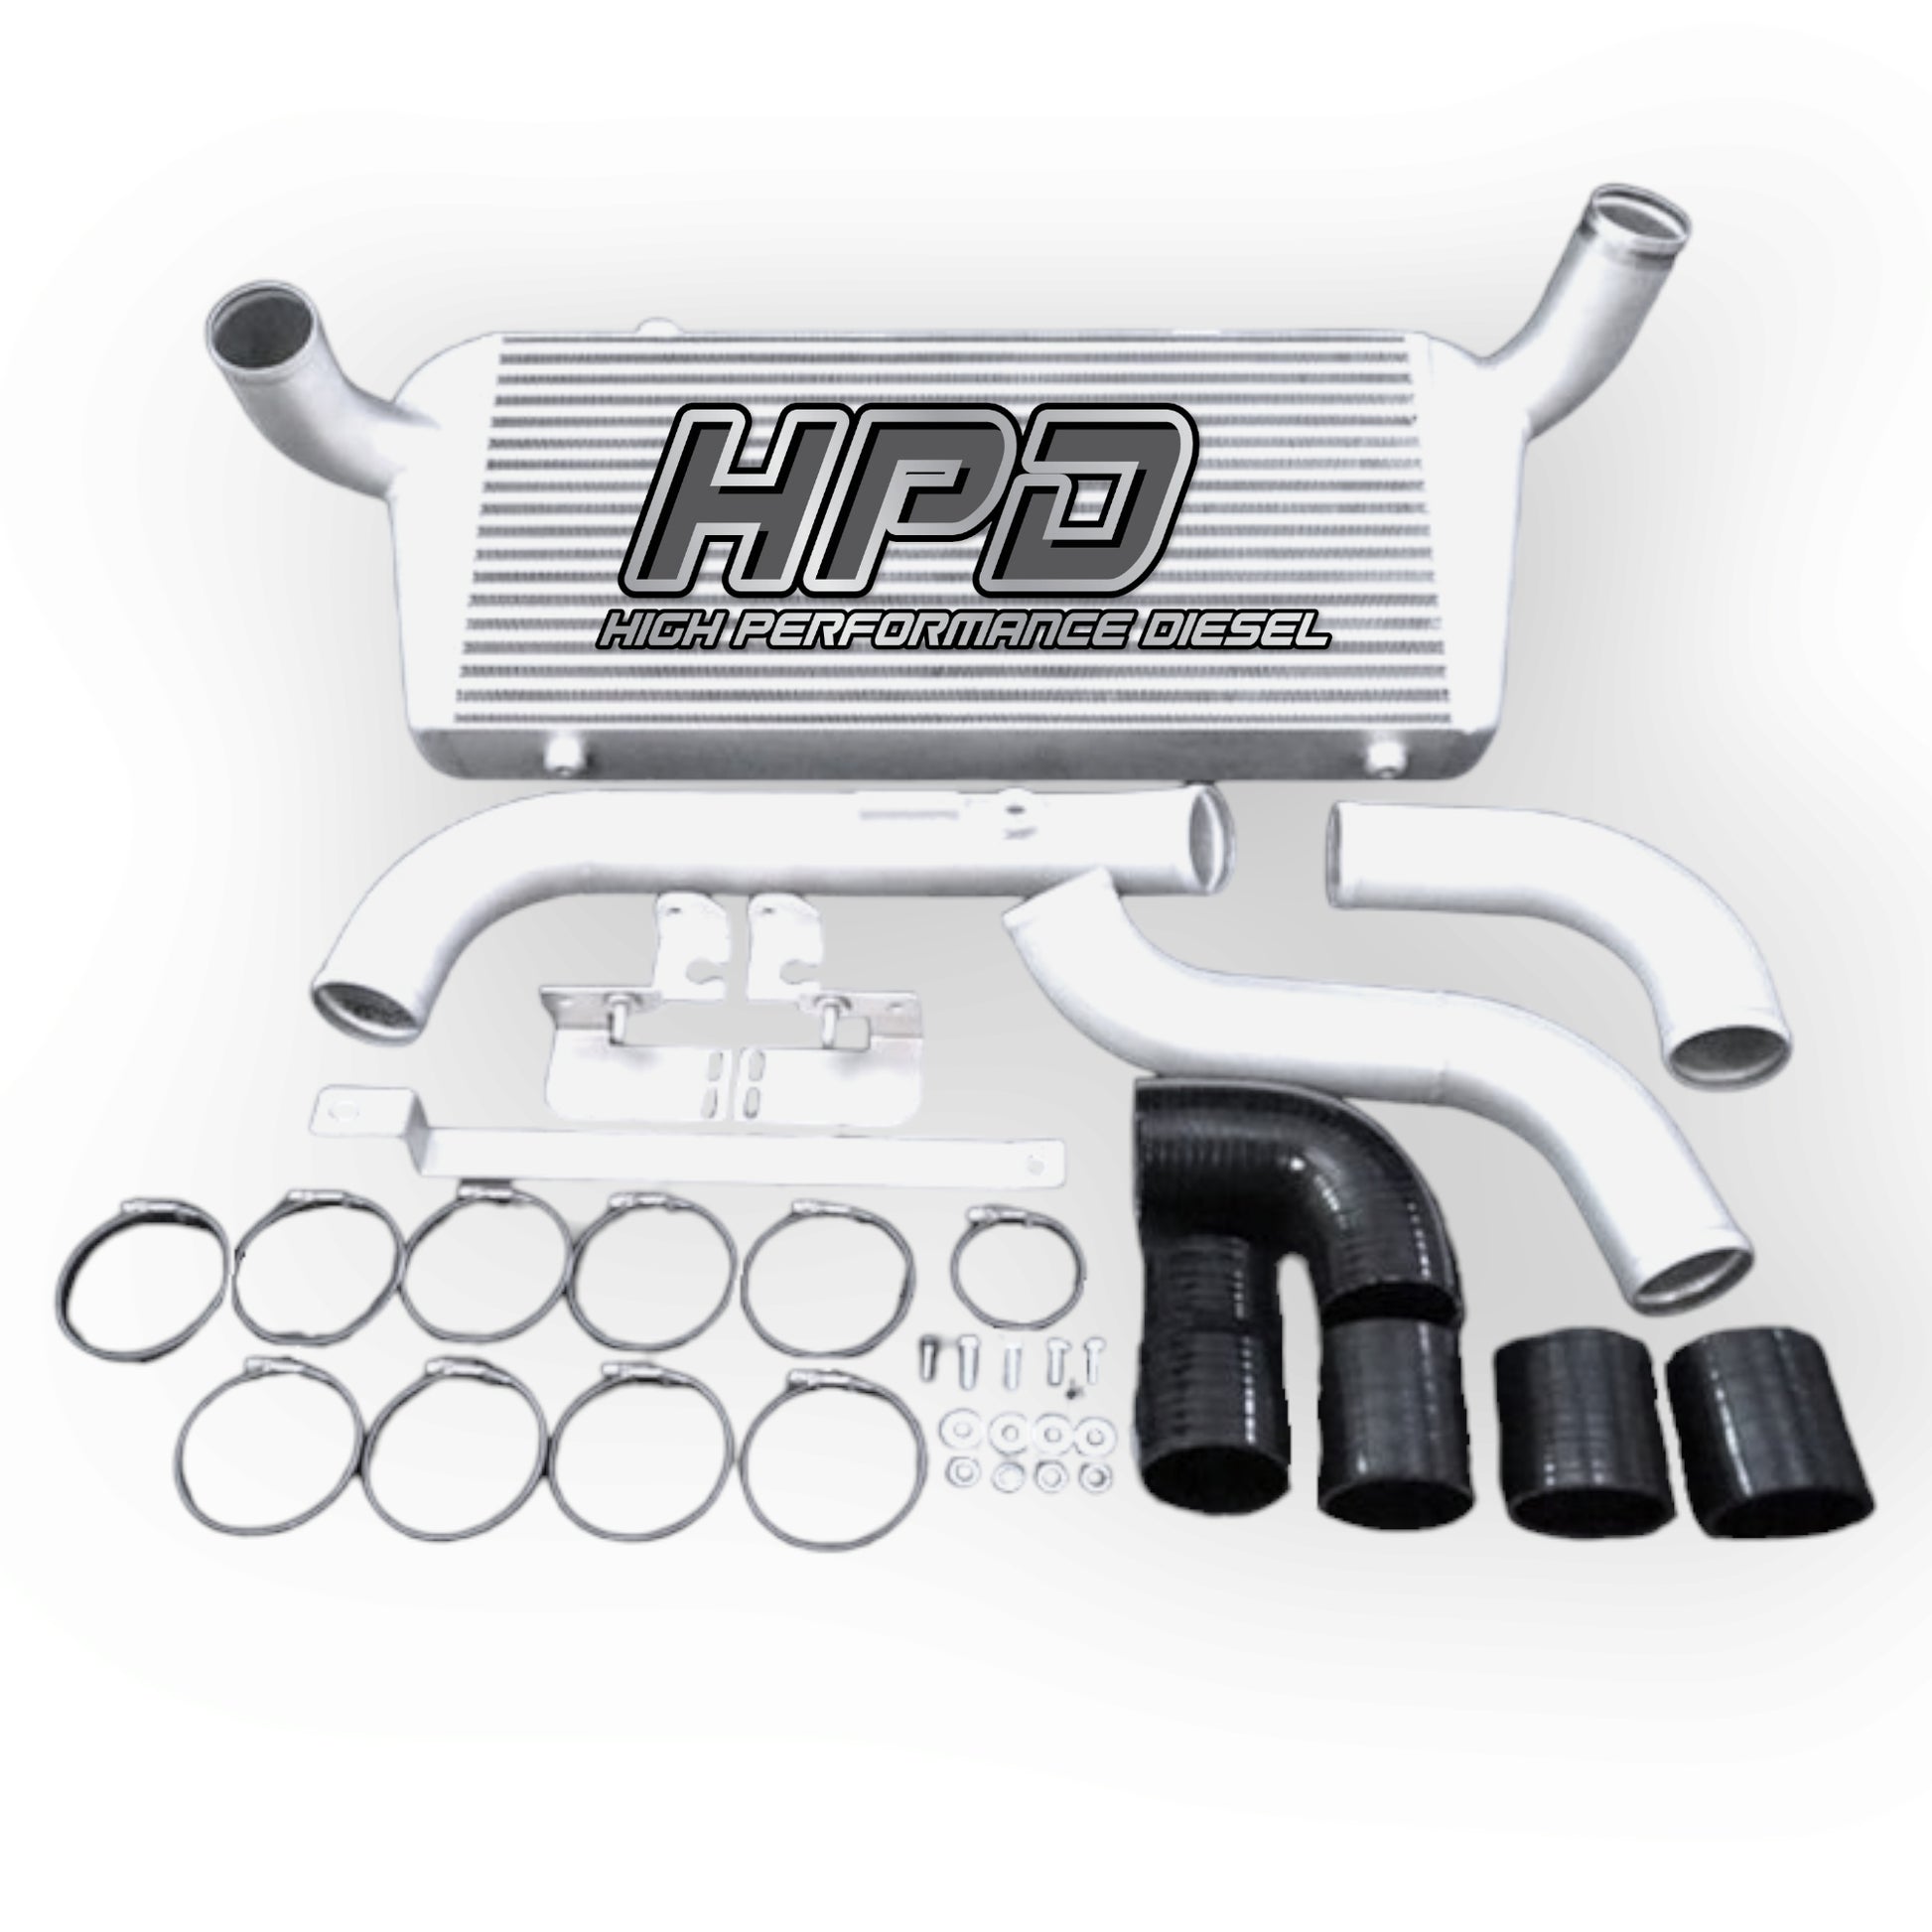 N70 Hilux Intercooler Kit - Series 2 - HPD - Common Rail Cowboys